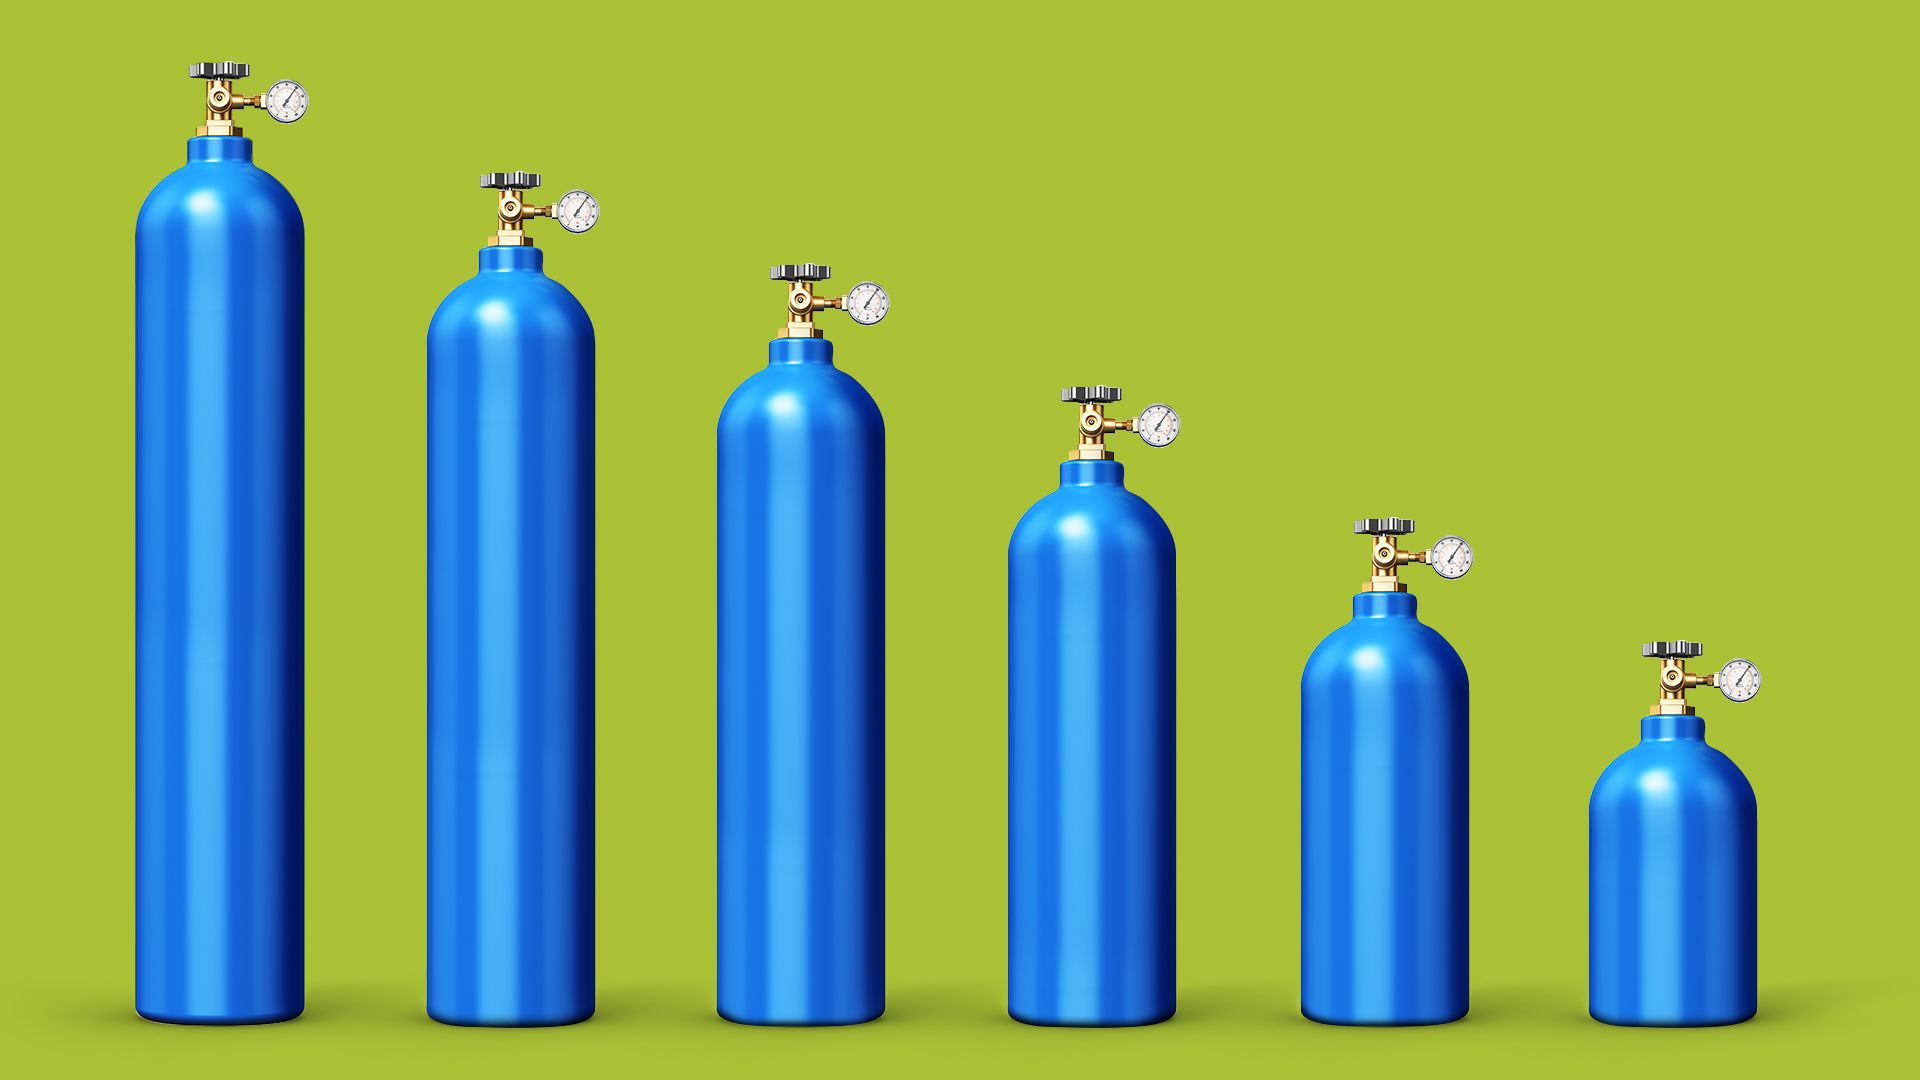 Illustration of oxygen tanks decreasing in size like a downward trending bar graph.  